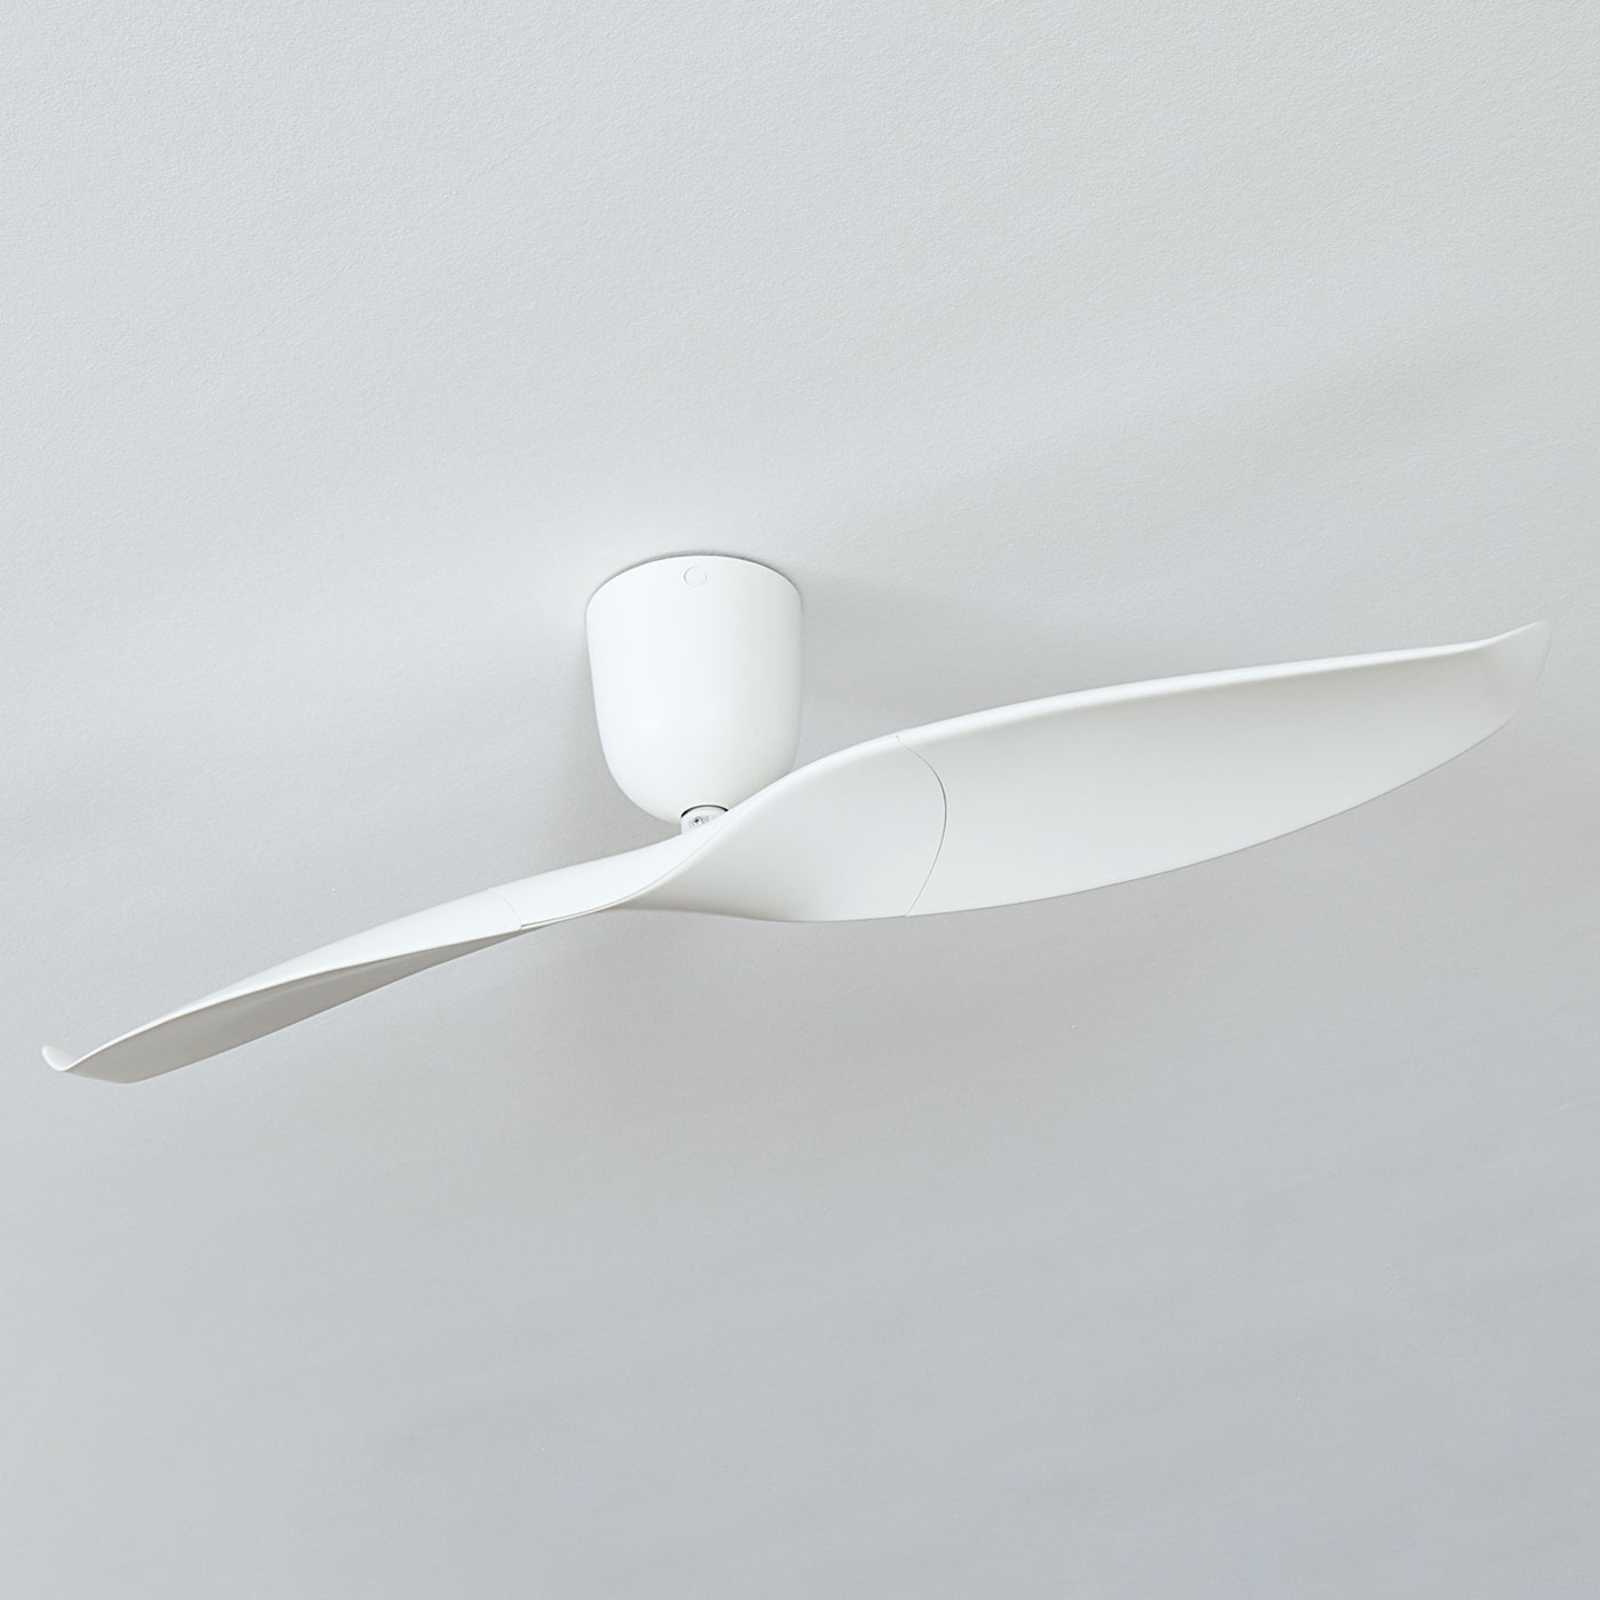 Aeratron AE2+ ceiling fan, 126 cm, white